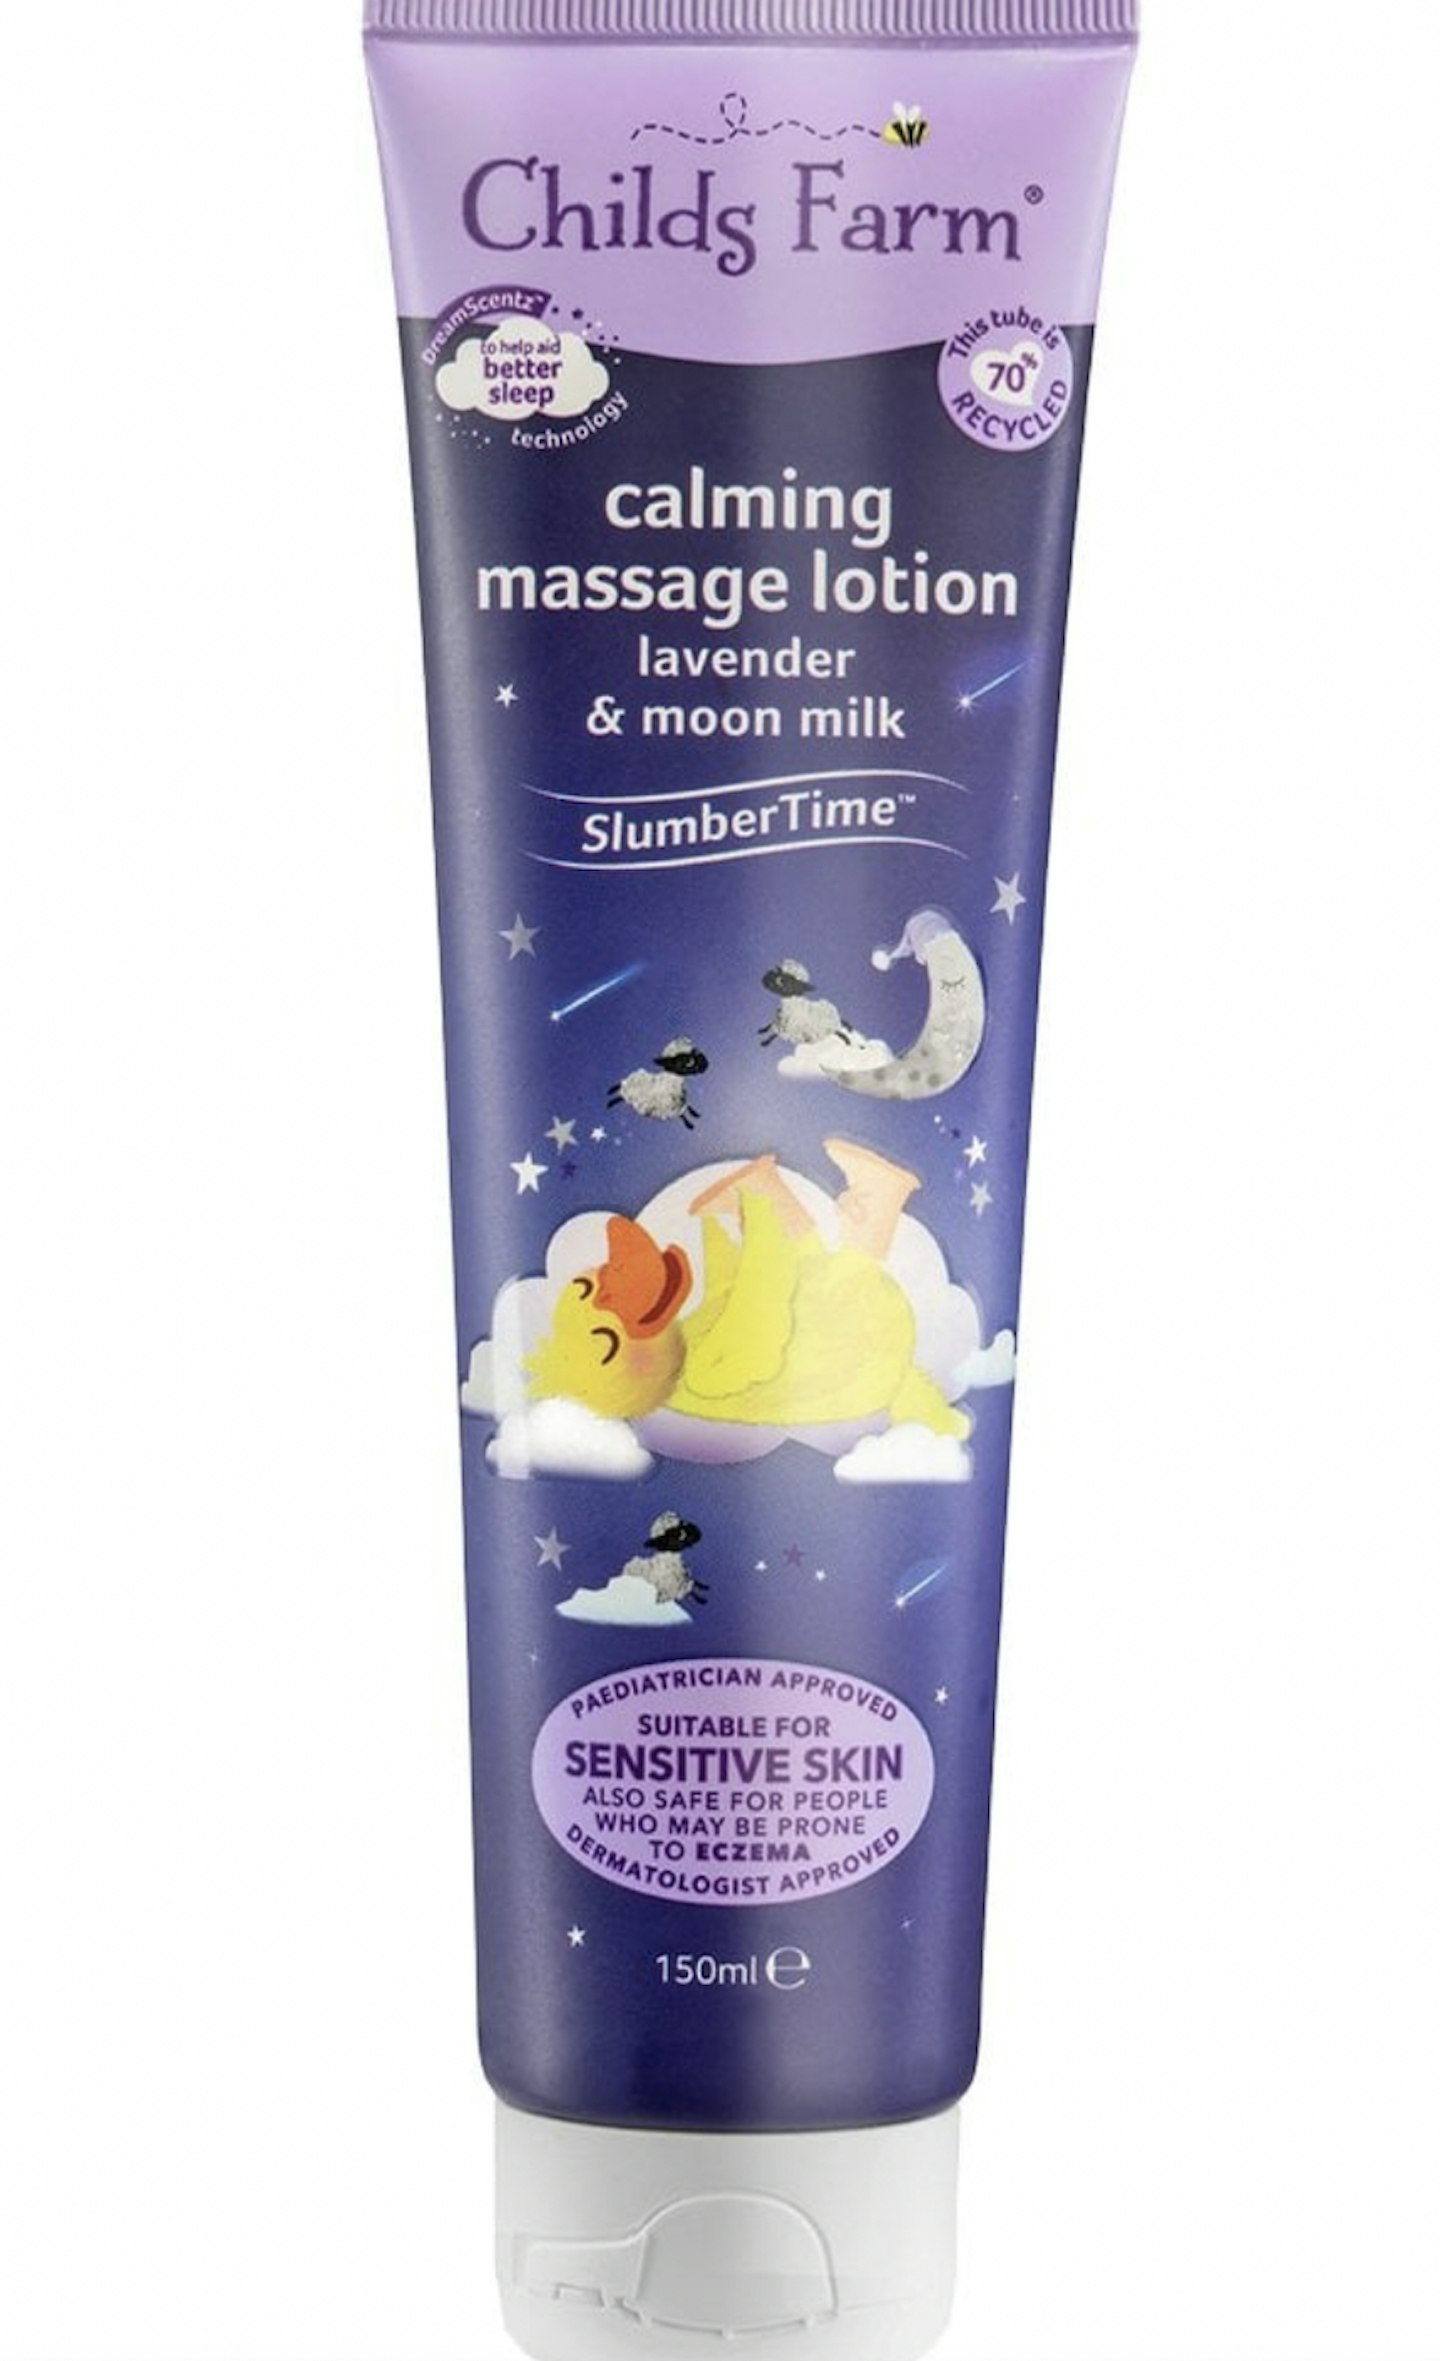 Childs Farm Calming Massage Lotion, Lavender & Moon Milk